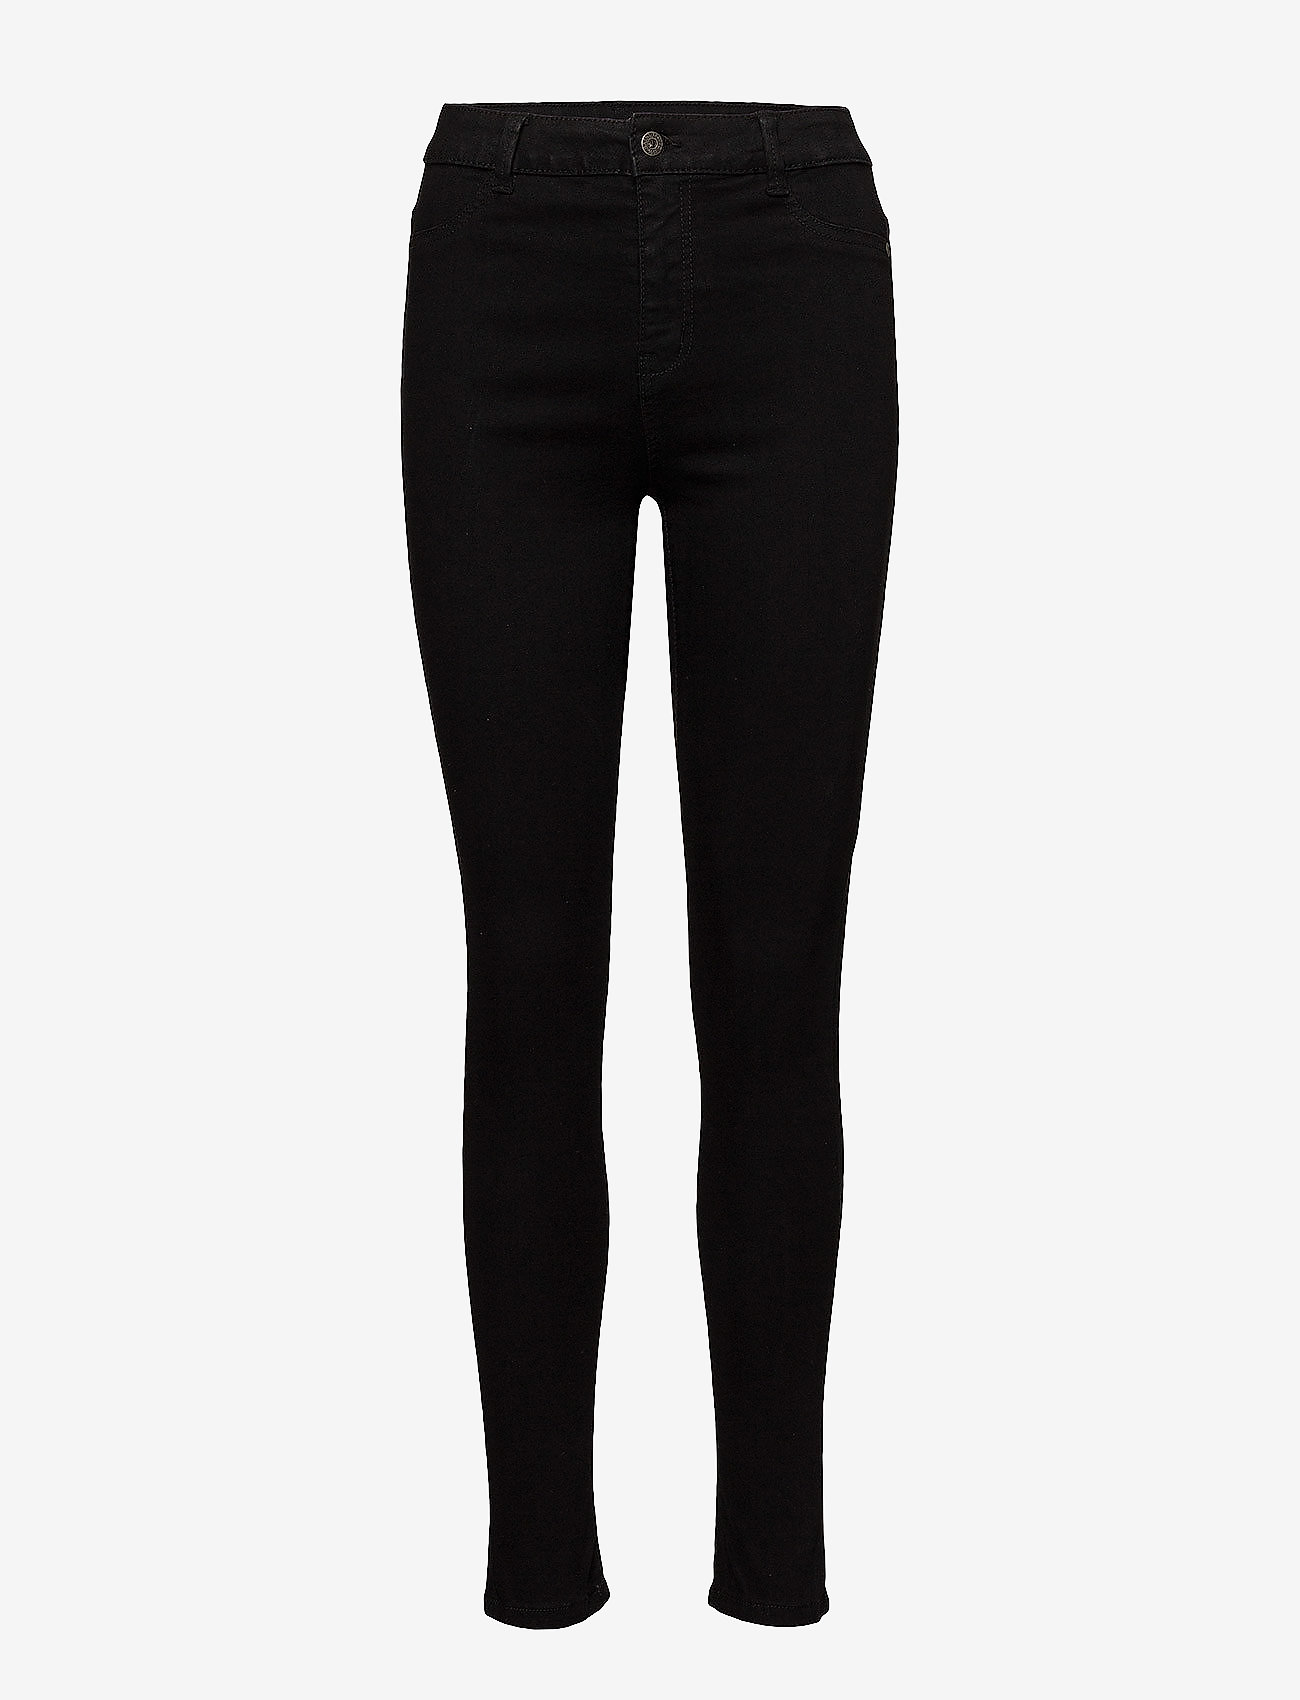 Saint Tropez - T5757, UllaSZ Jeans - skinny jeans - black - 0